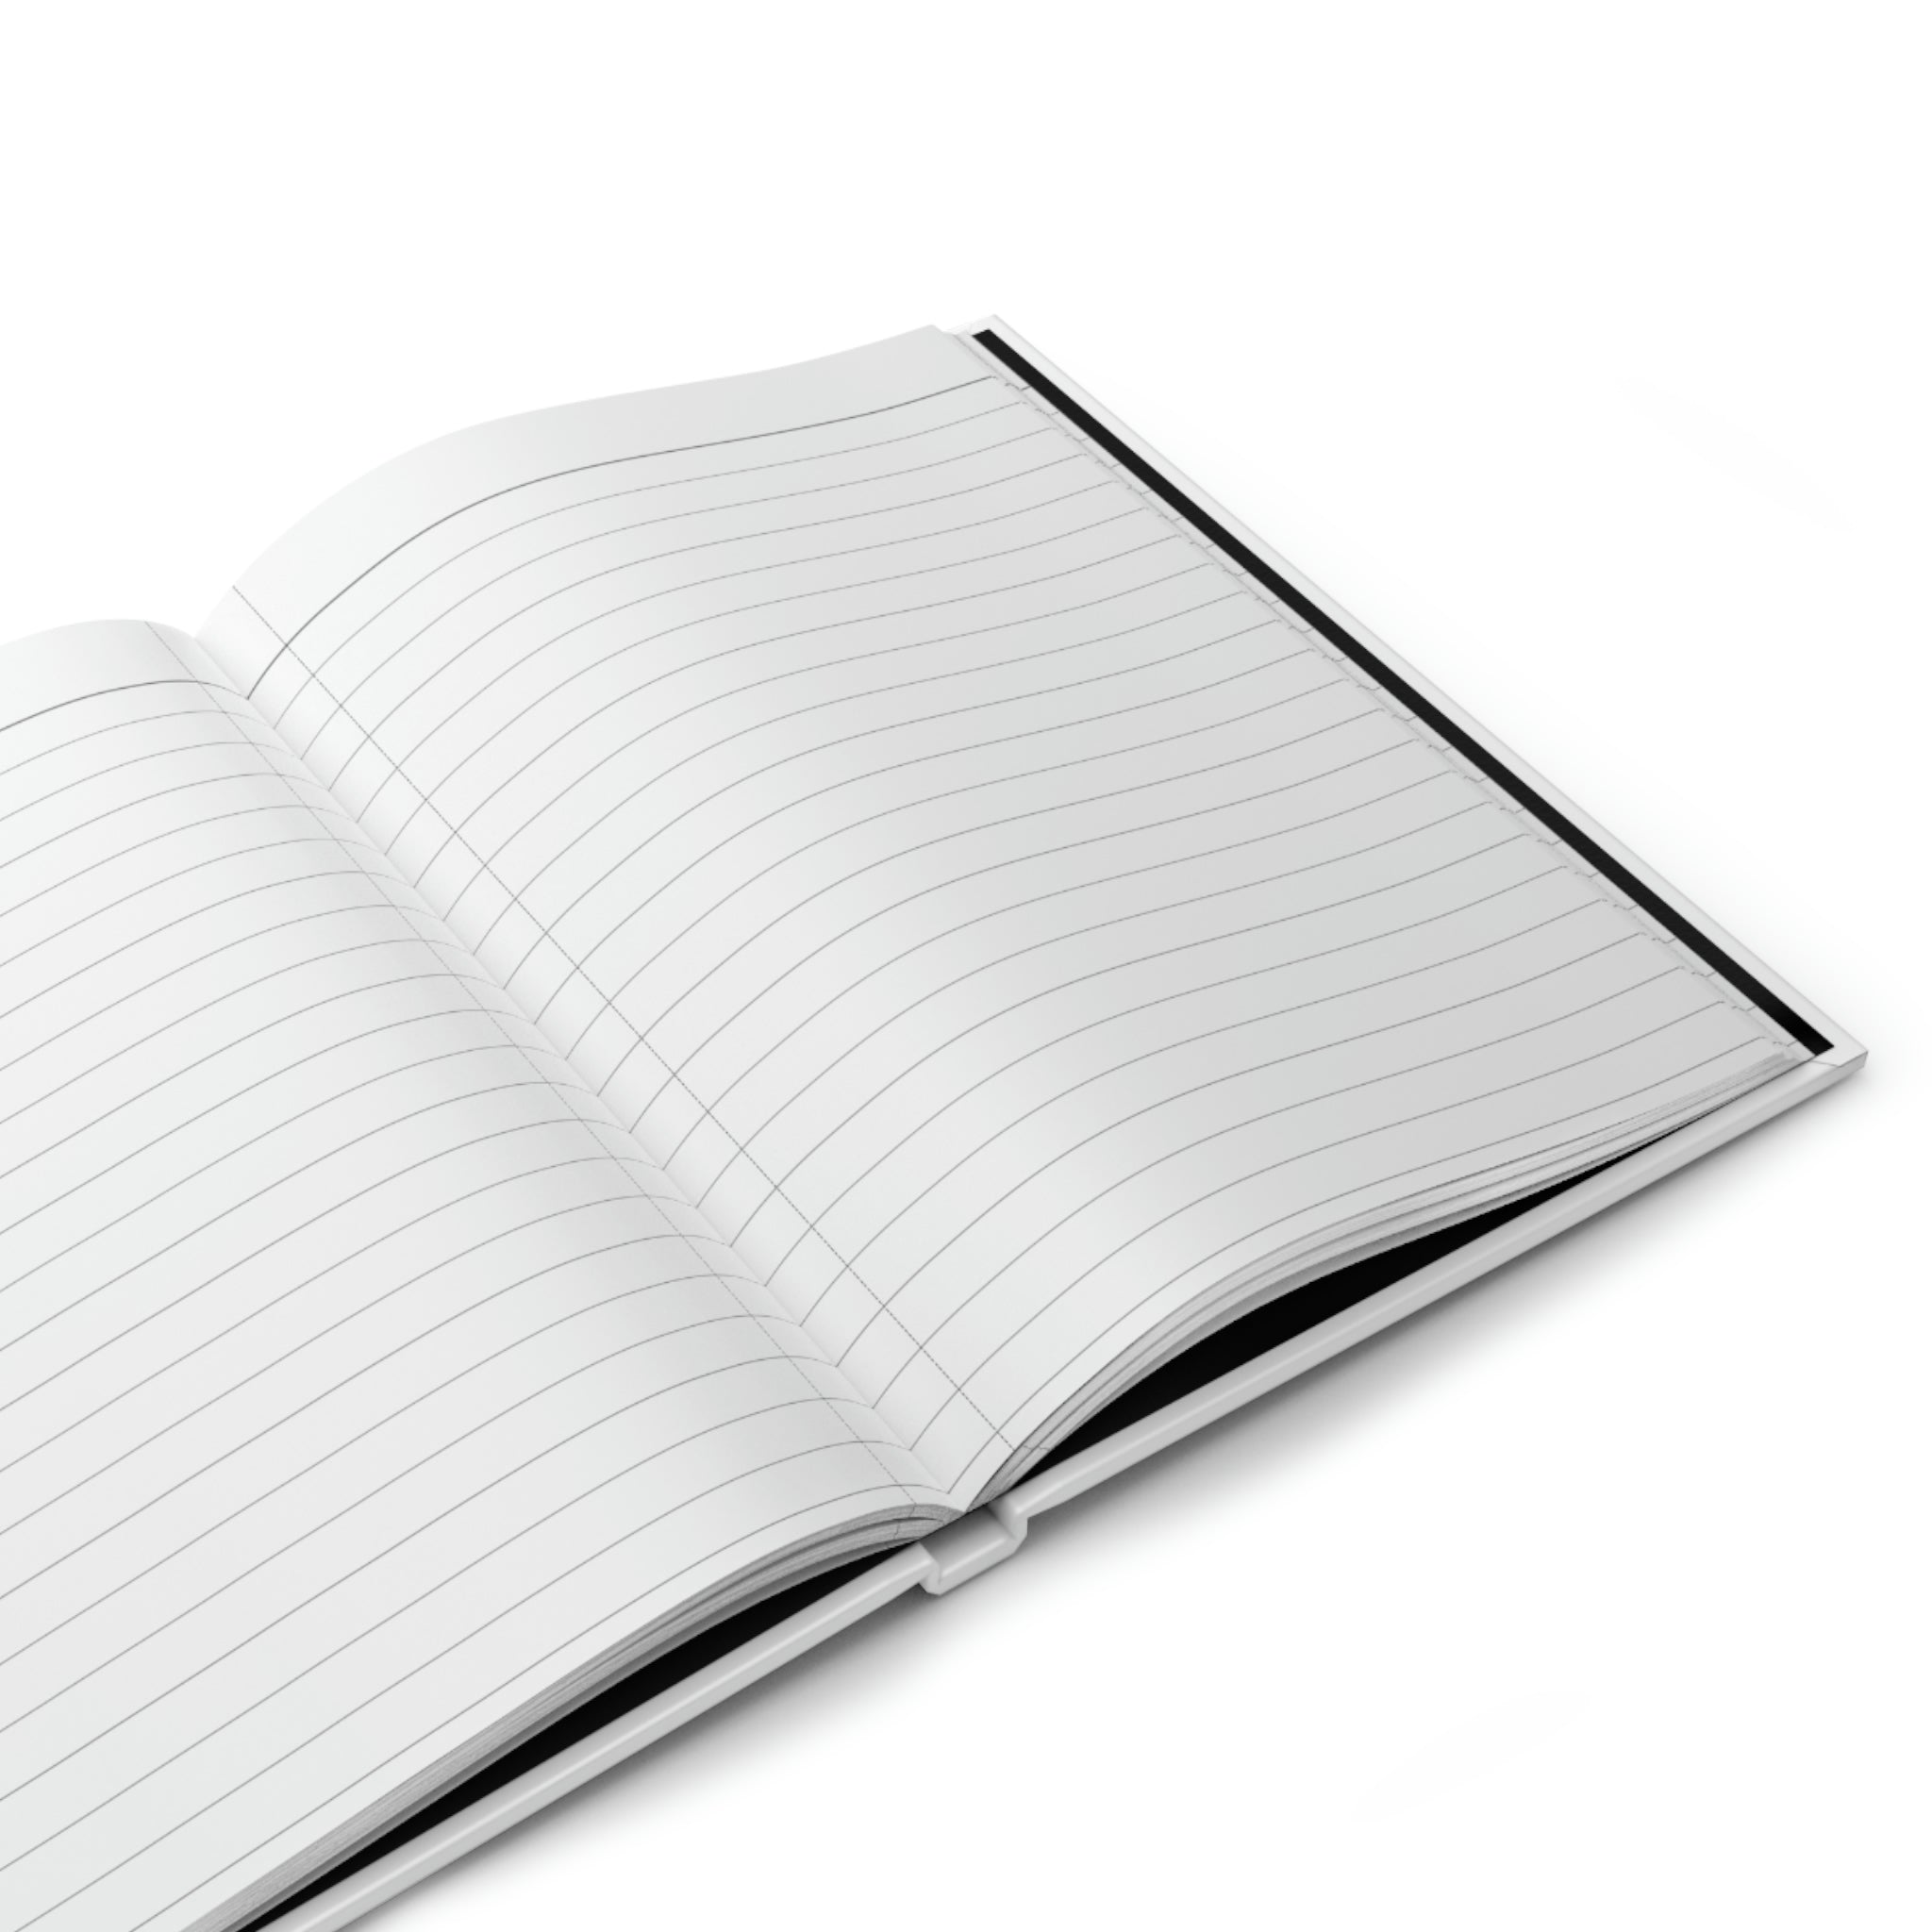 Goals Hardcover Journal